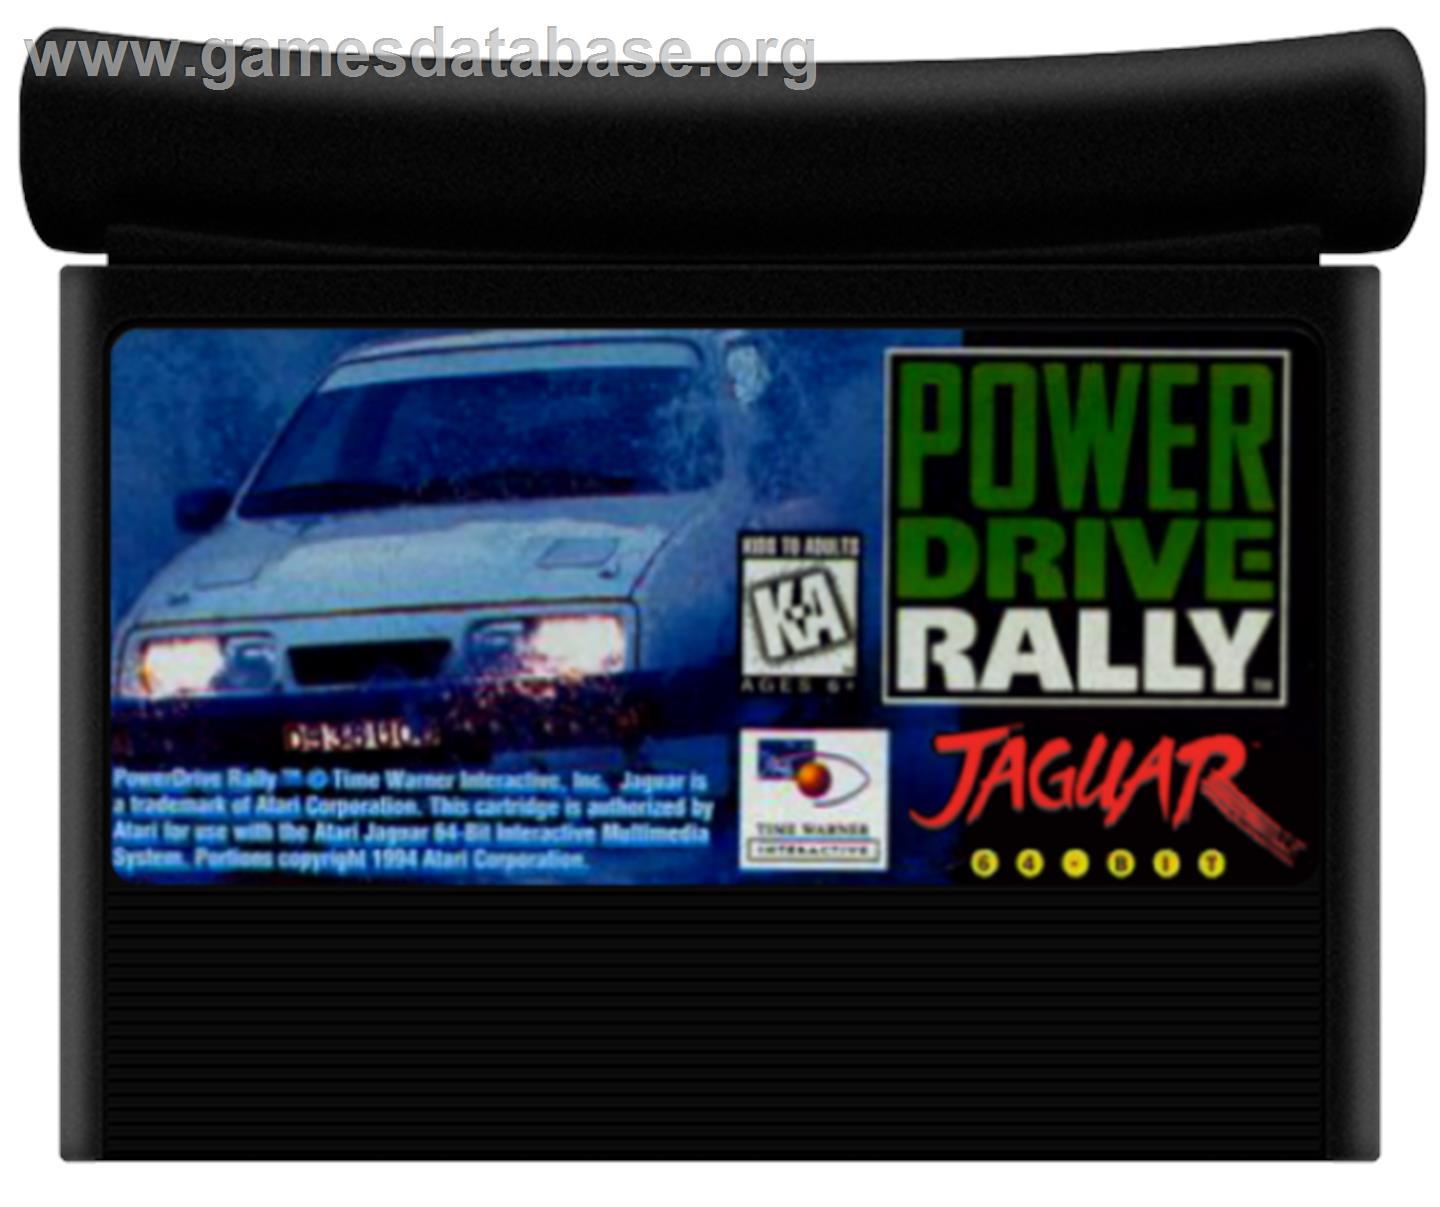 Power Drive Rally - Atari Jaguar - Artwork - Cartridge